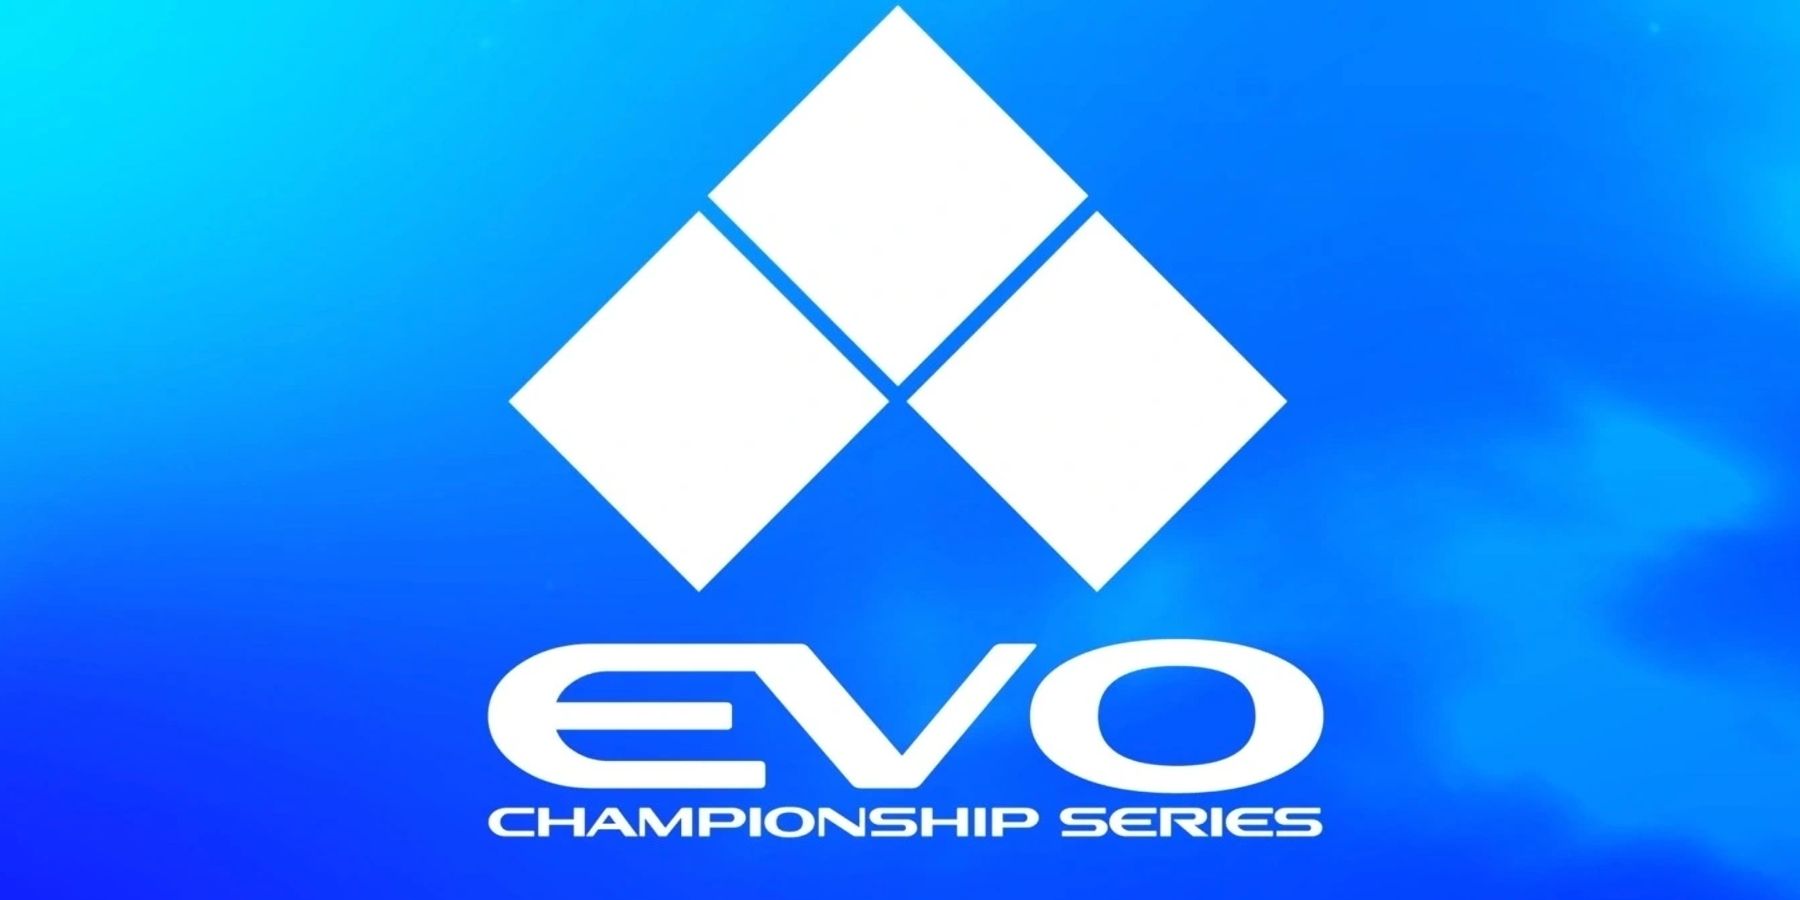 evo championship series logo